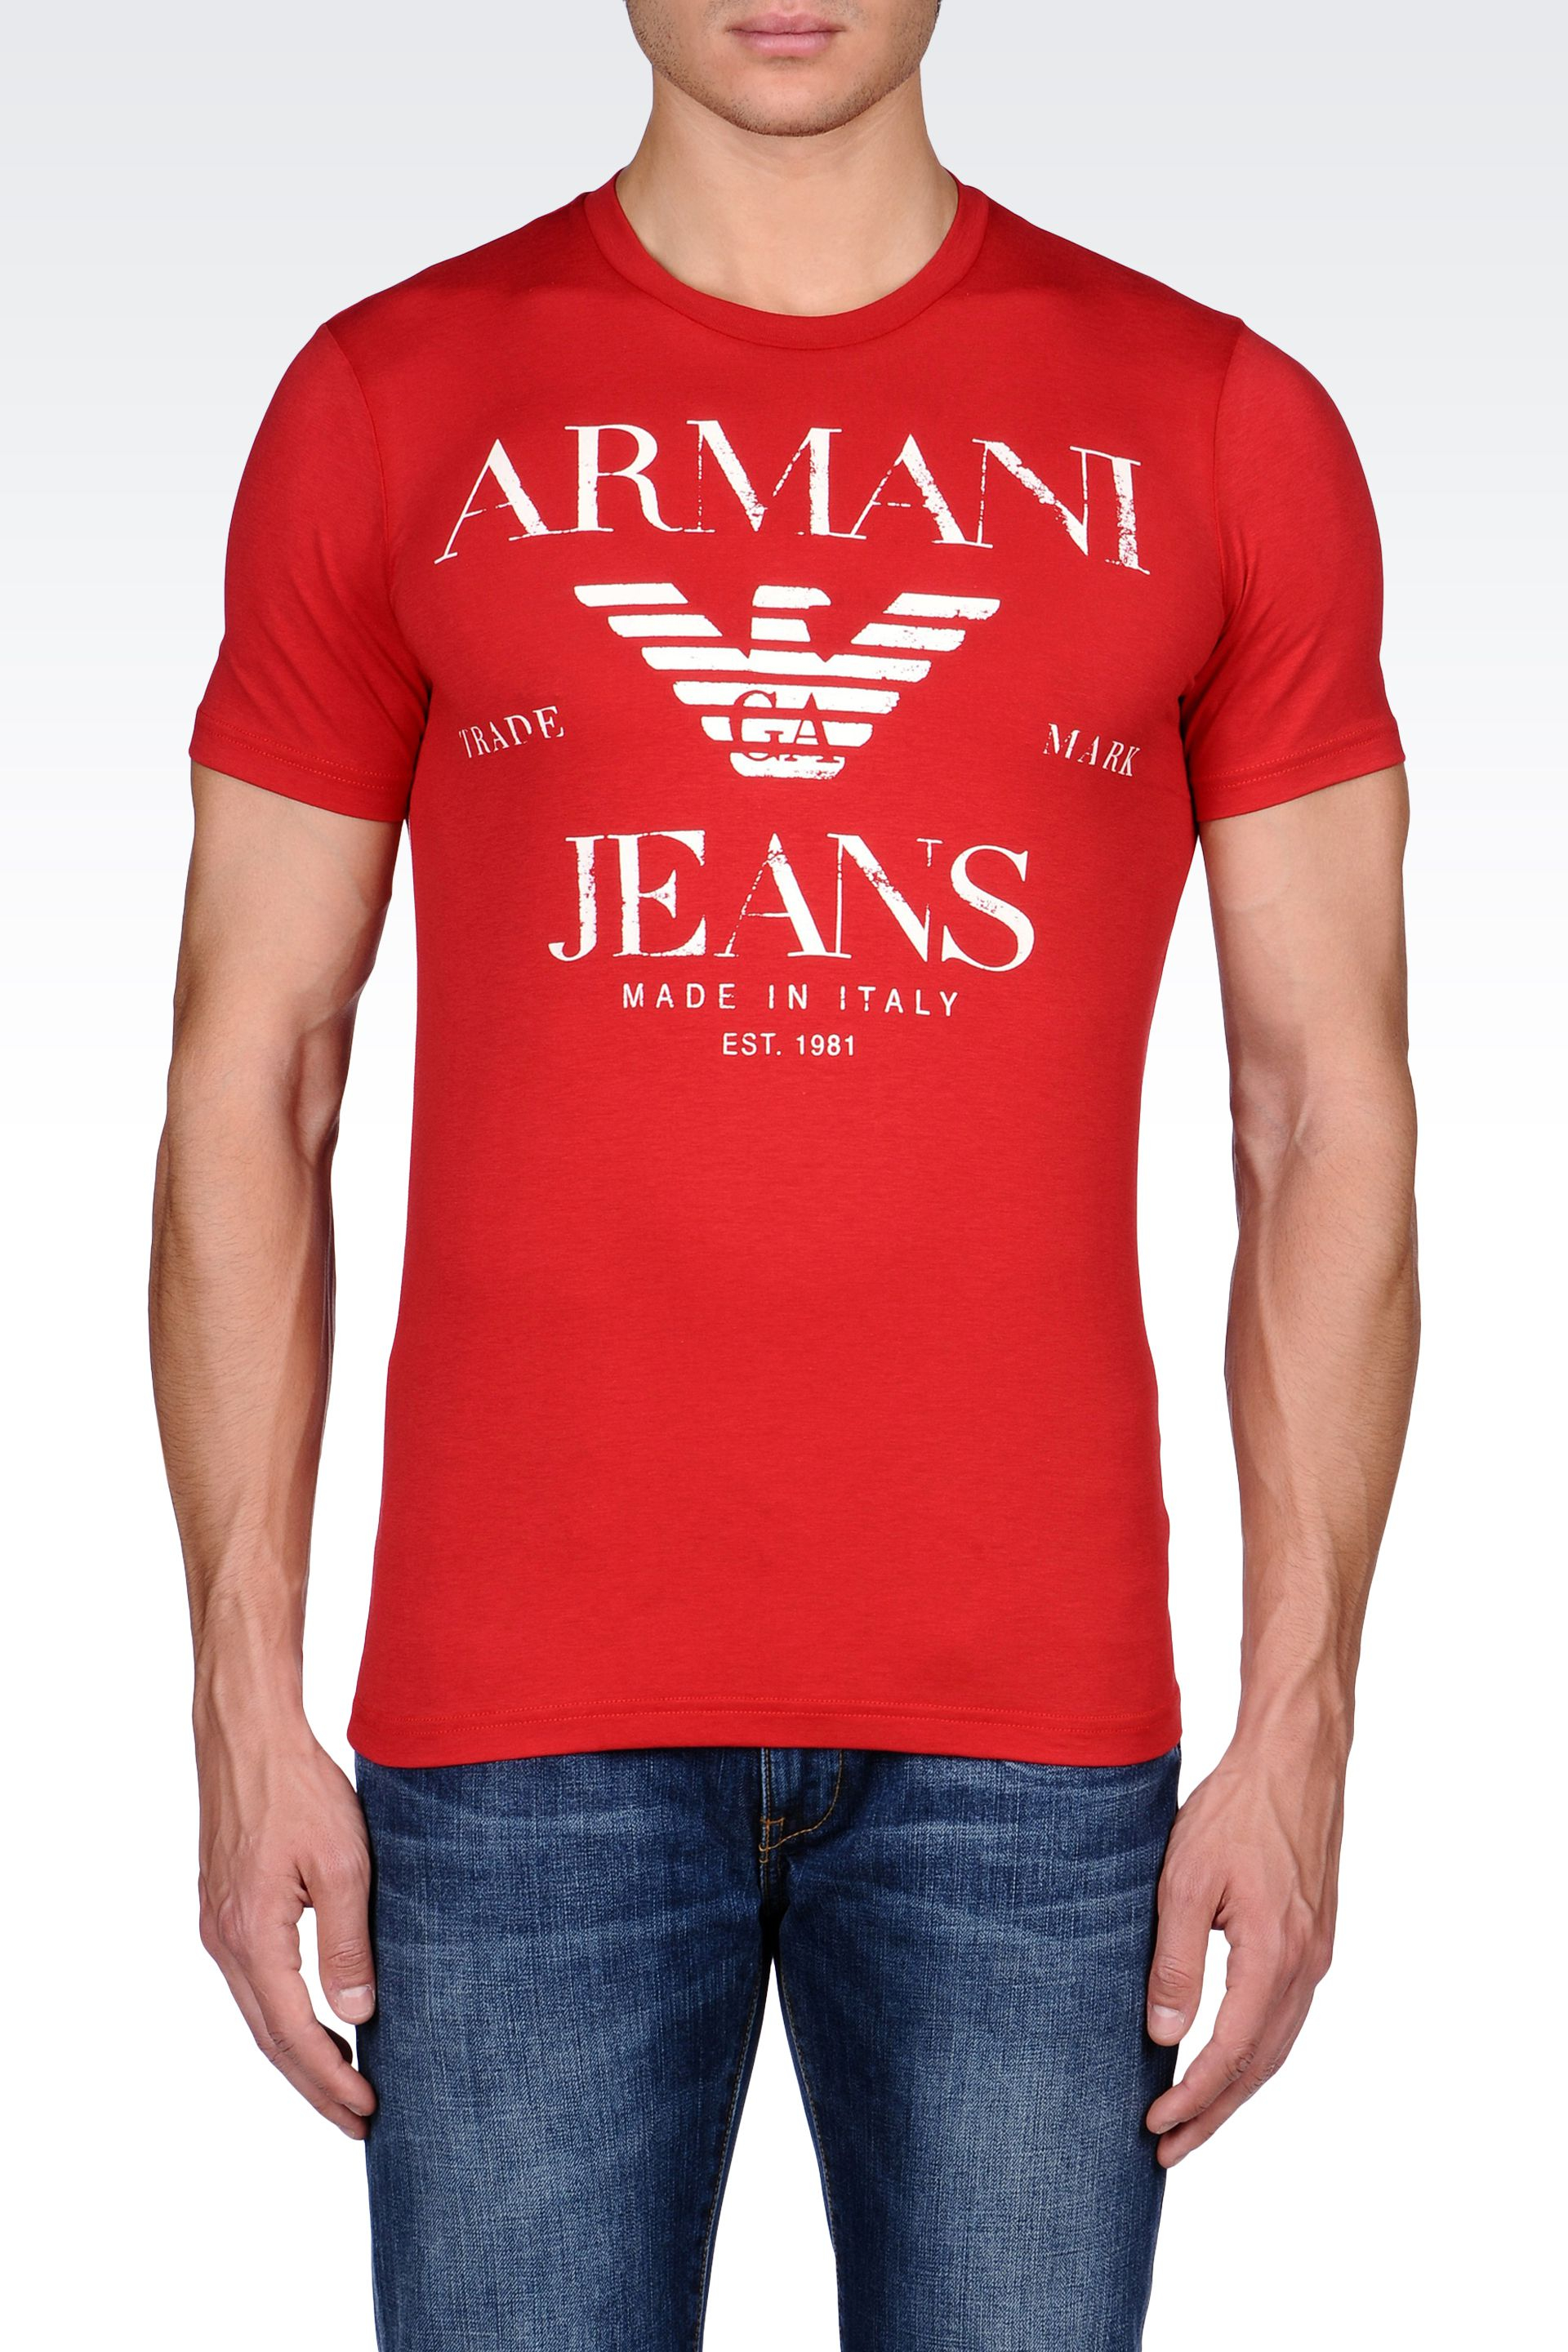 armani red t shirt